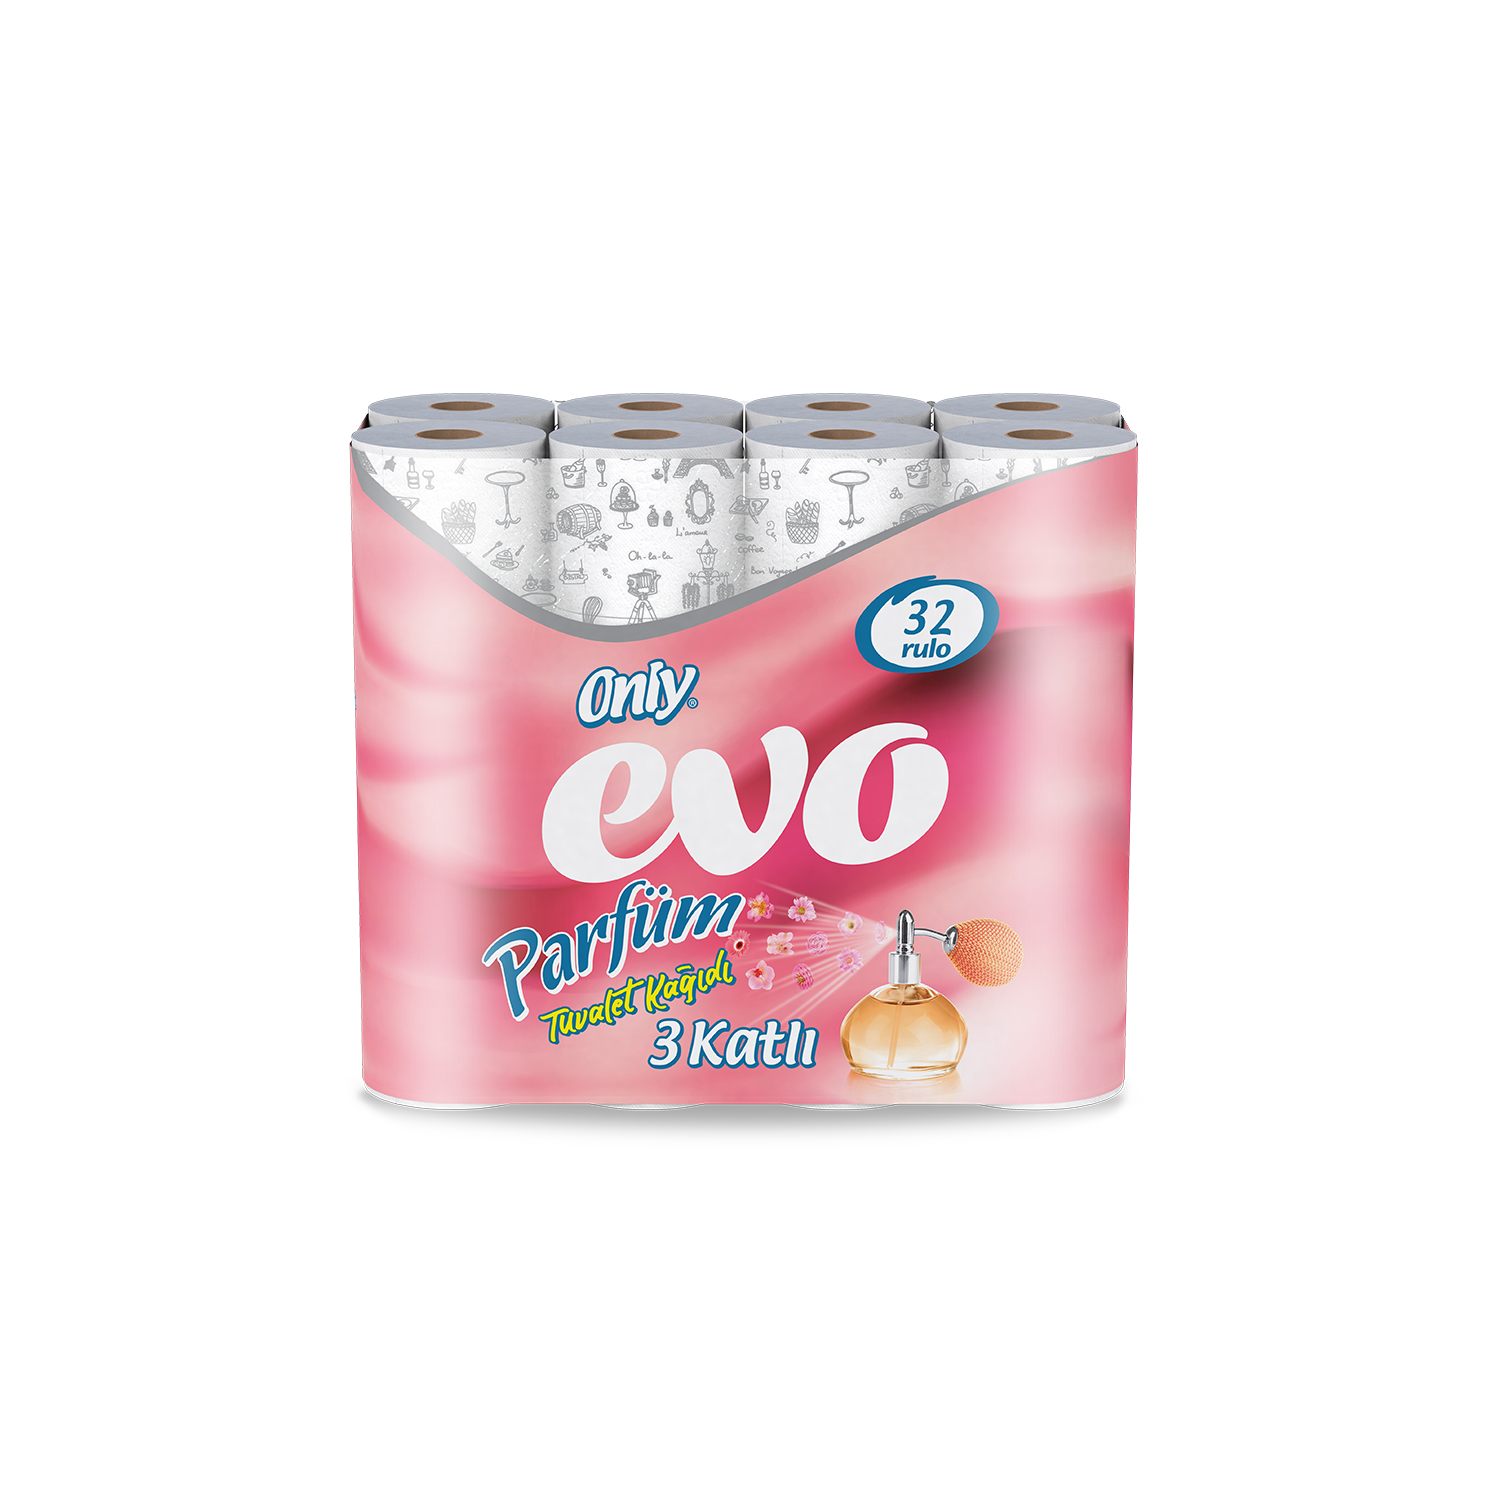 Only Evo Parfüm Tuvalet Kağıdı 3 x 32 Rulo